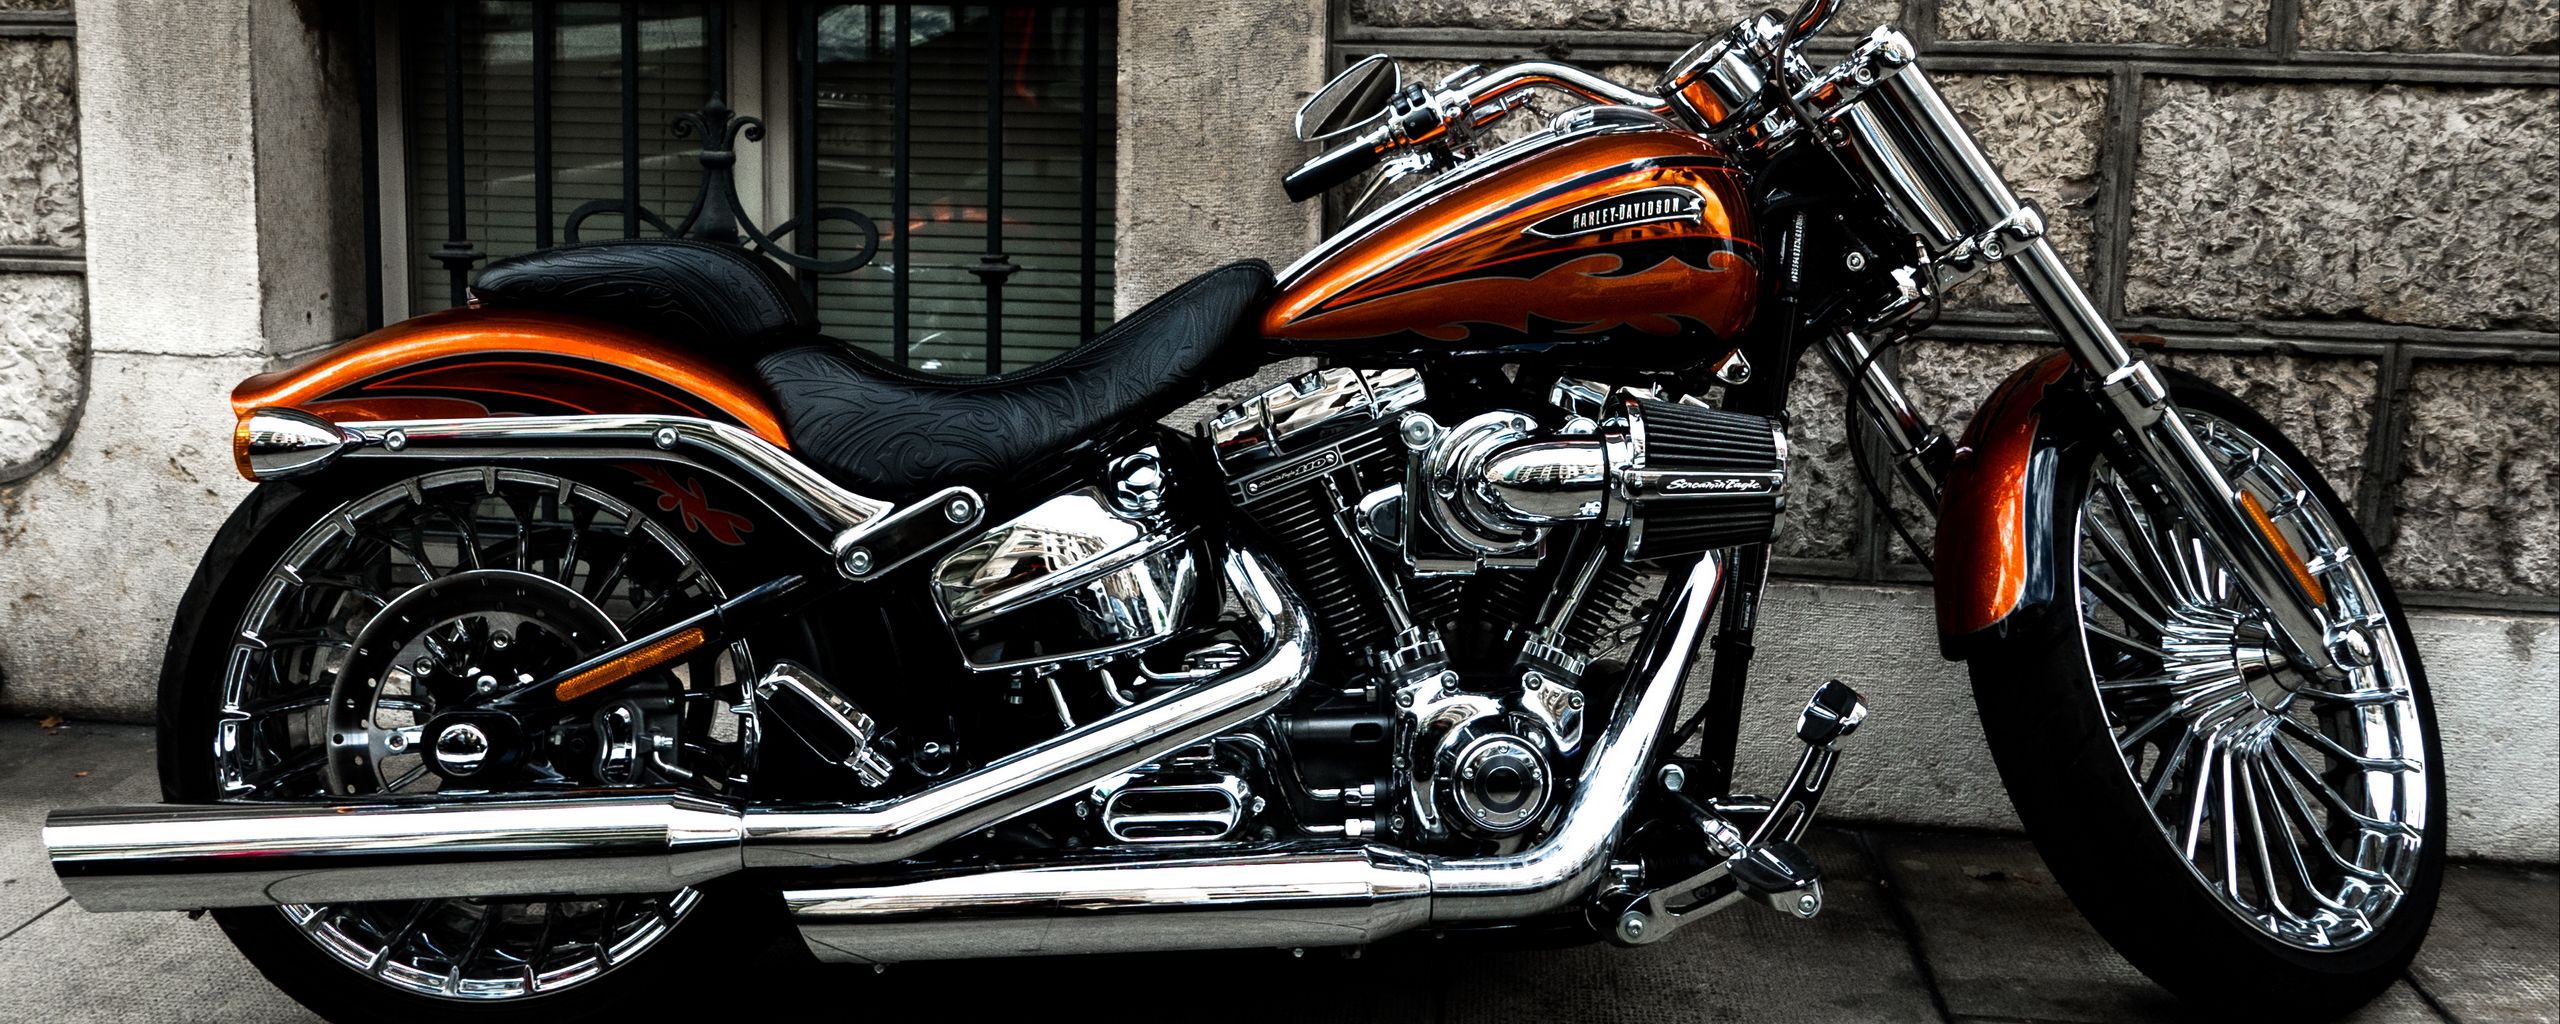 2560x1024 Wallpaper motorcycle, bike, side view, wheel